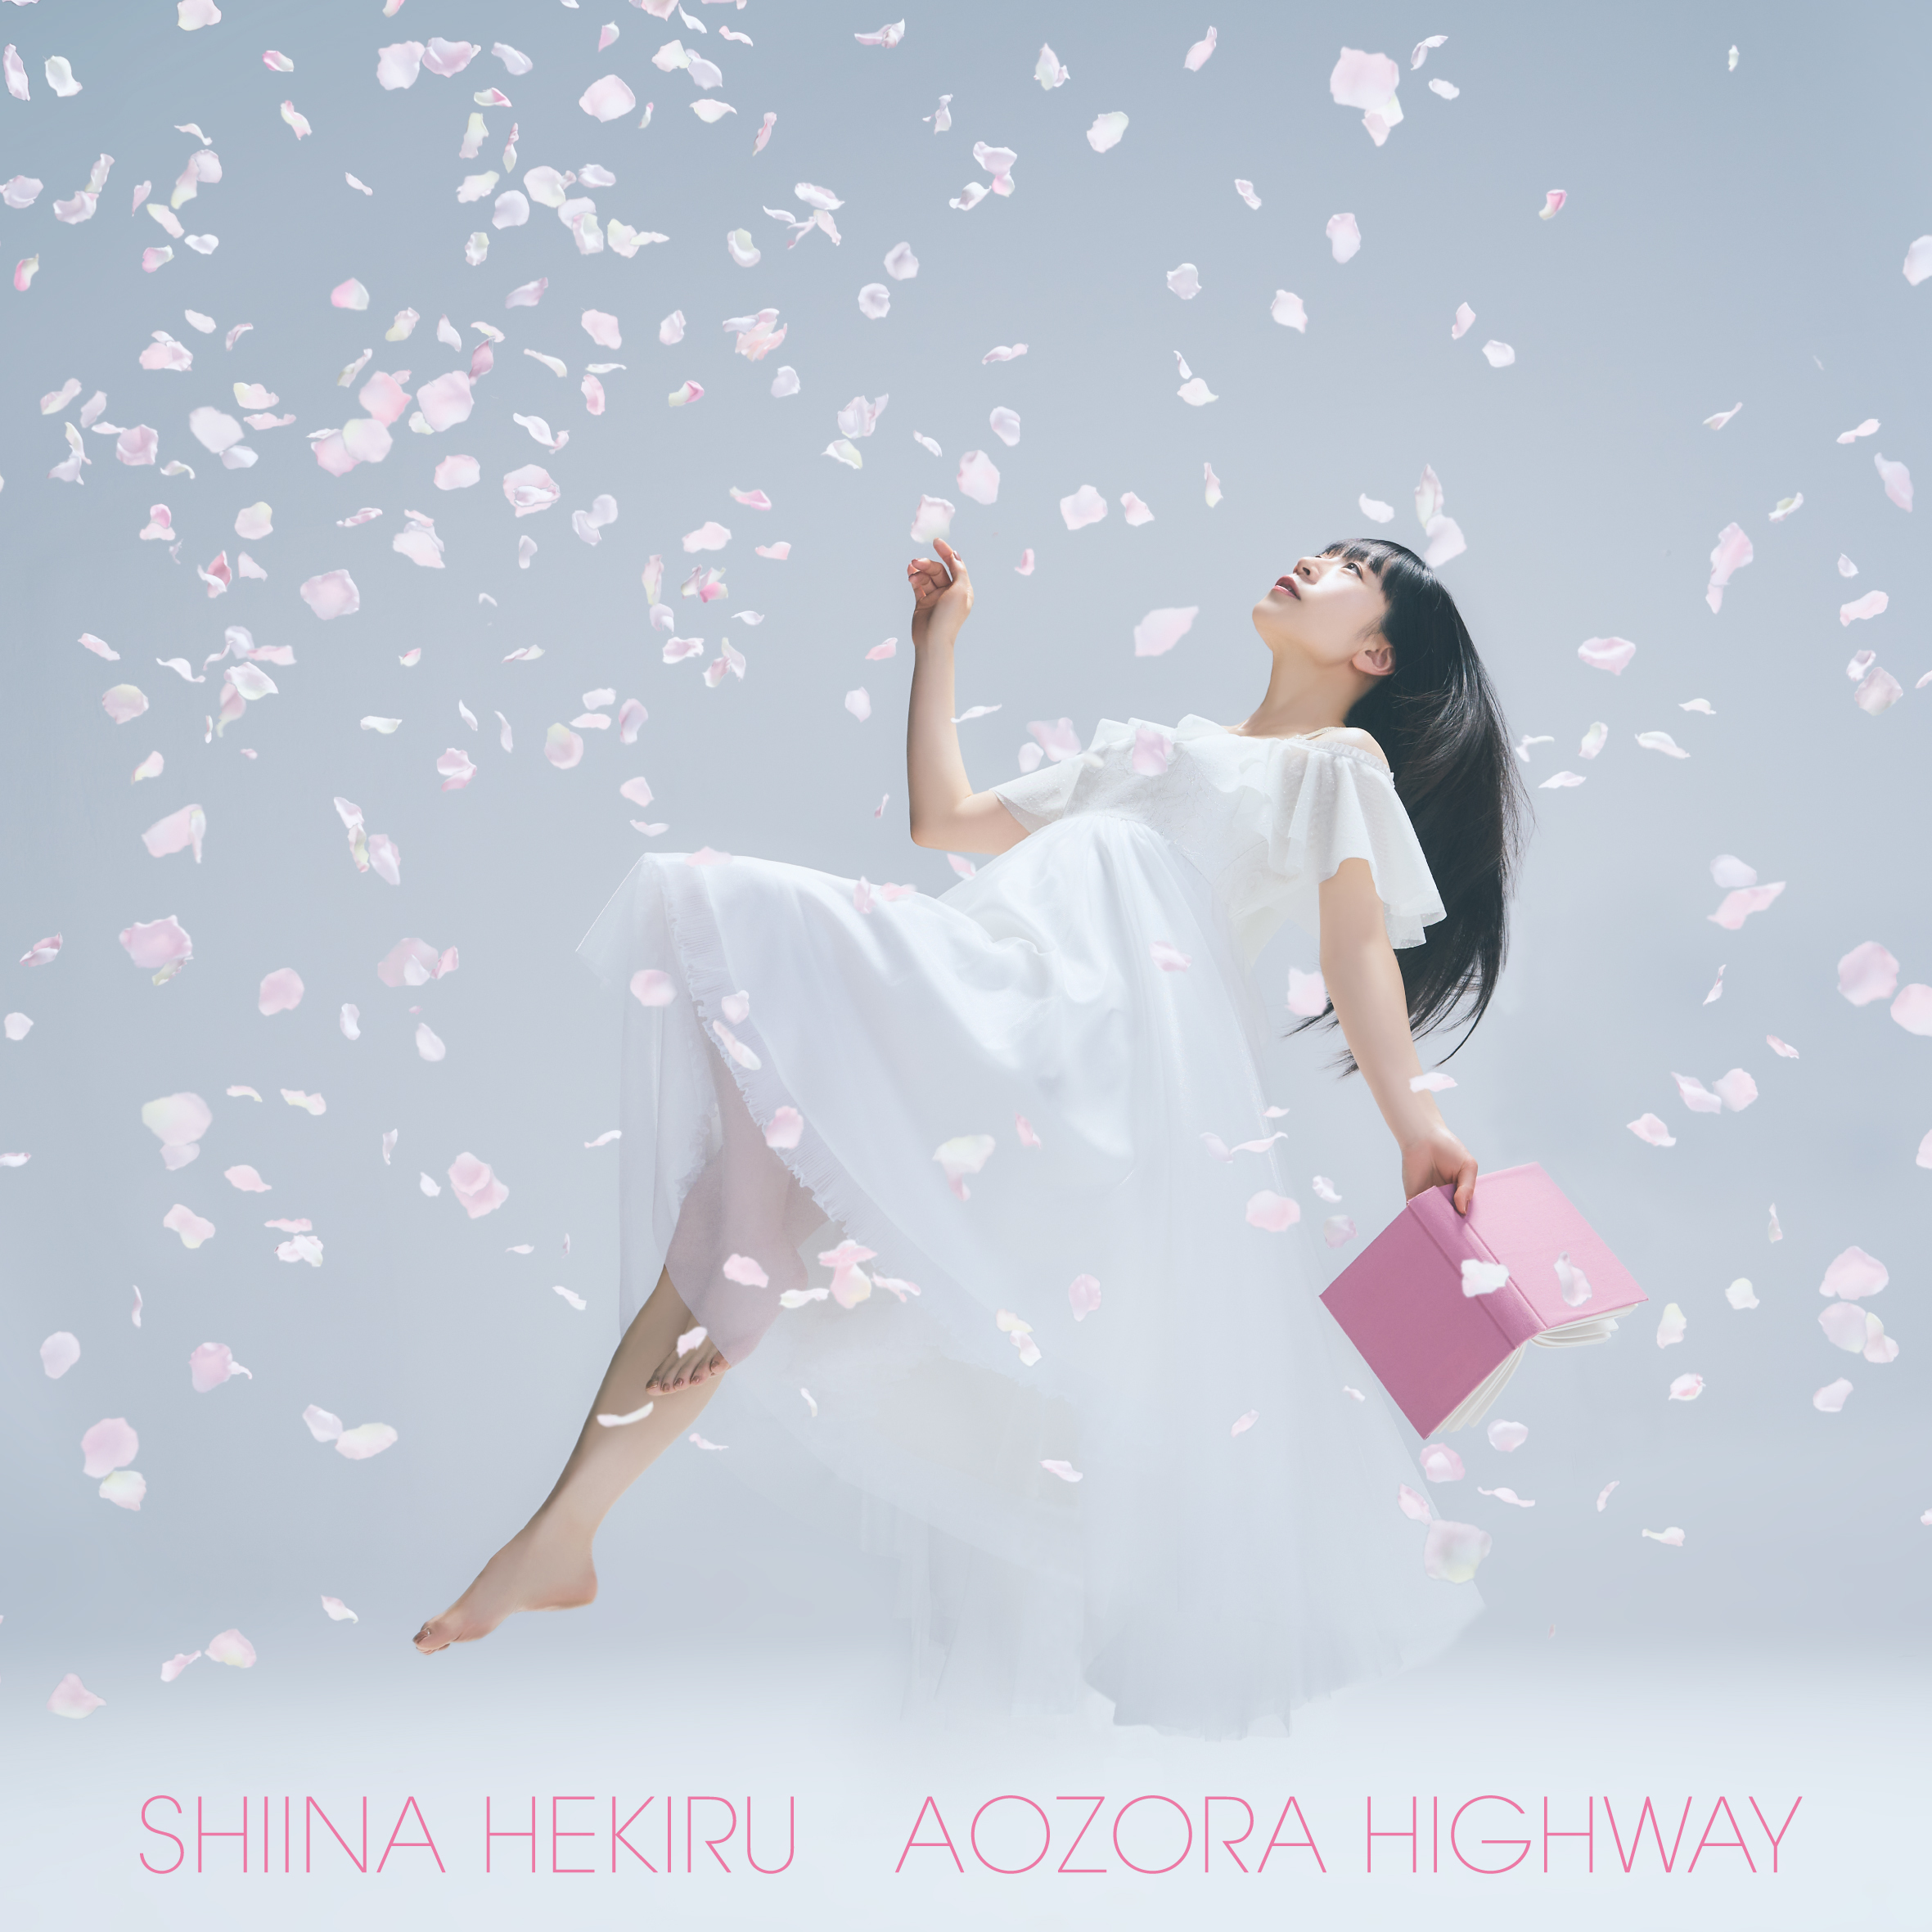 DISCOGRAPHY - Hekiru Shiina Official Site